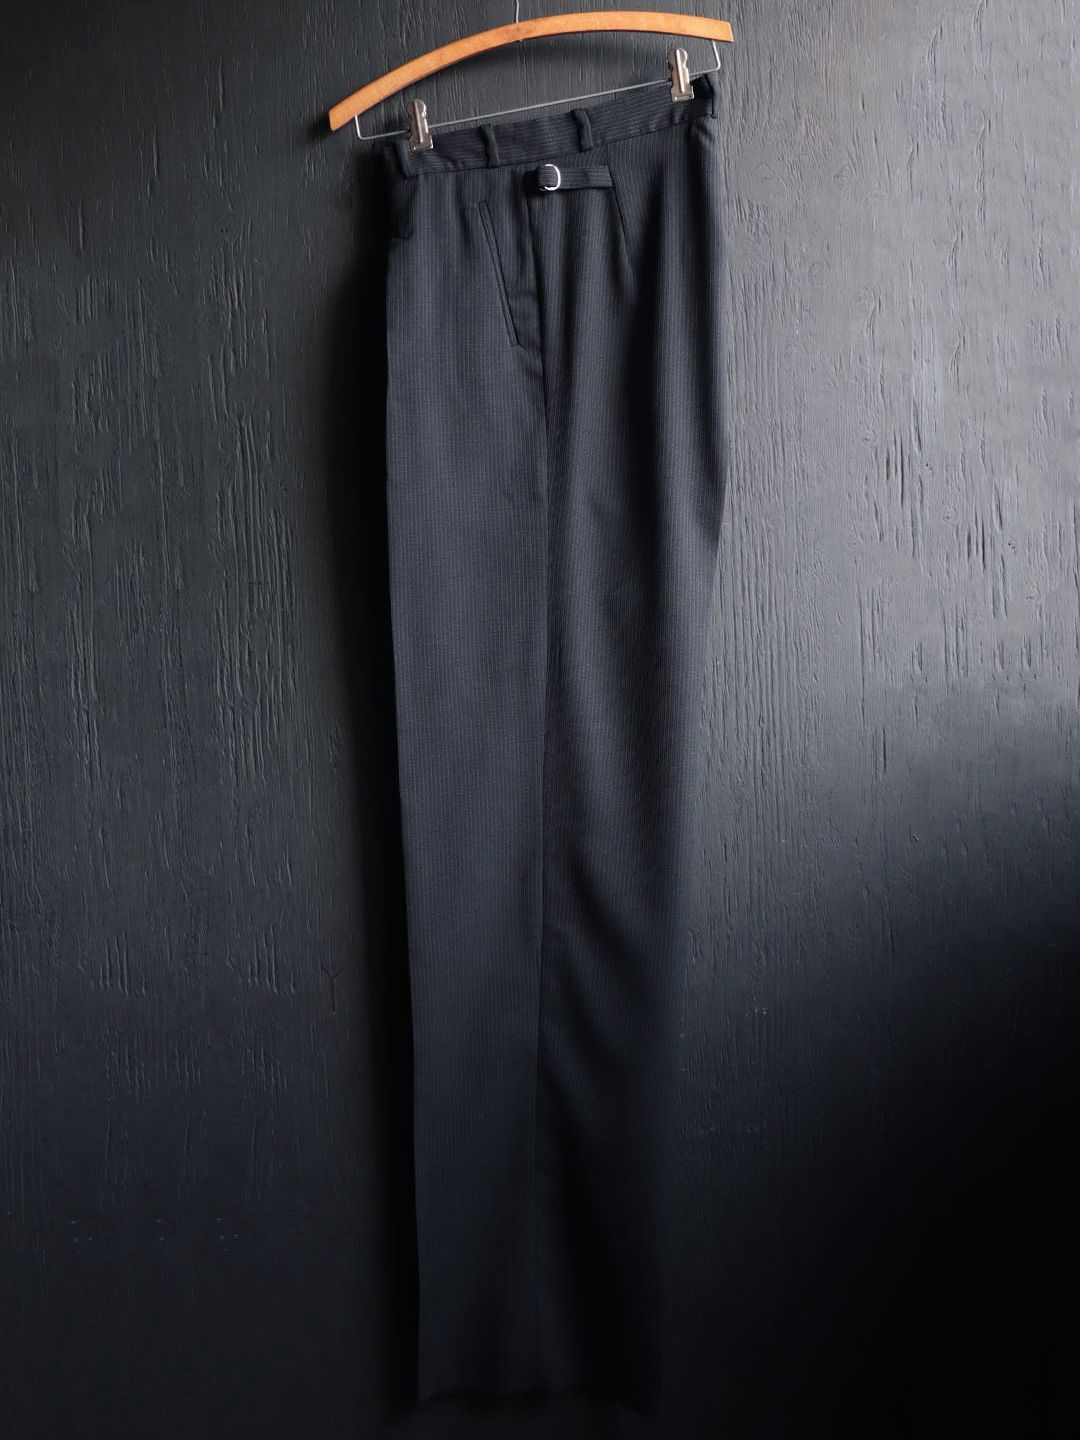 BLACK SIGN - 1930s PIN STRIPE DRESS TROUSERS | SKANDA